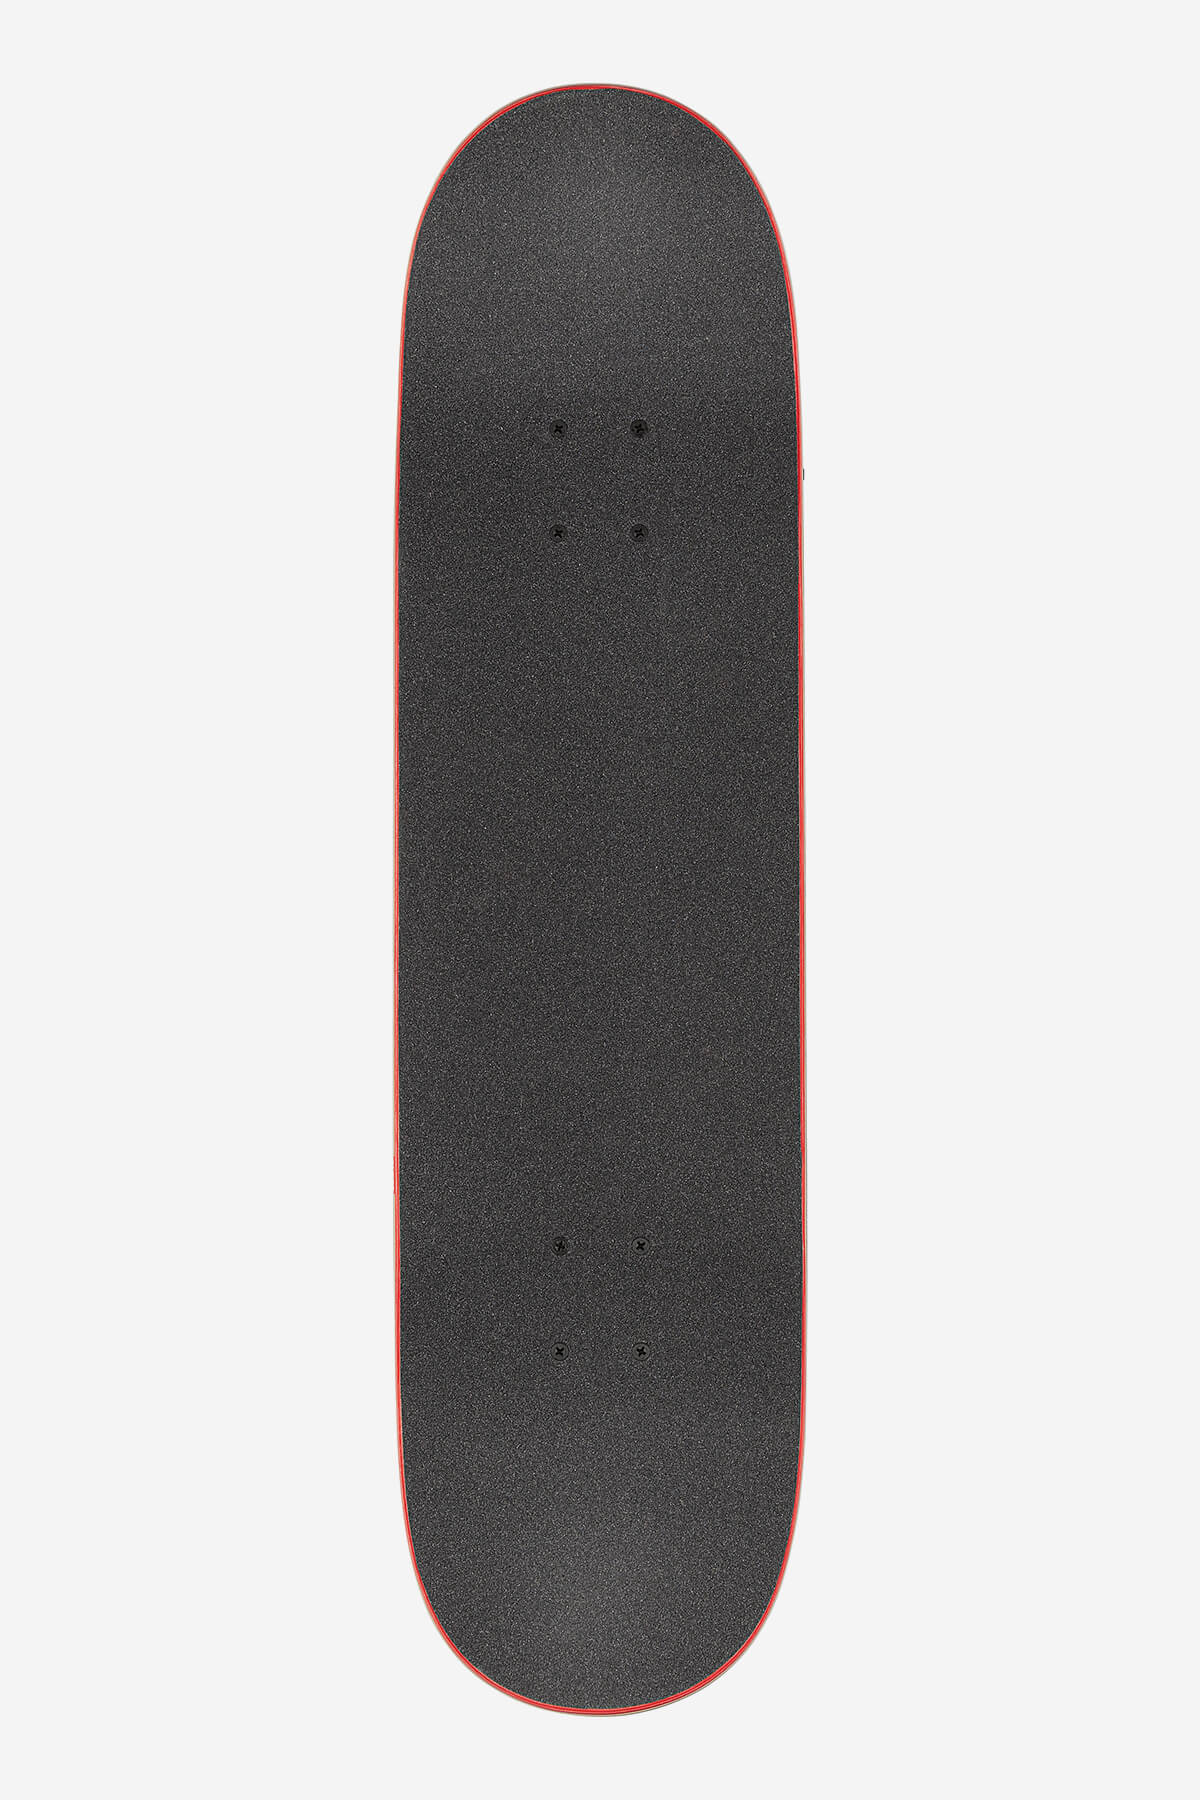 Globe - G1 Stack - Daydream - 8.25" complet Skateboard